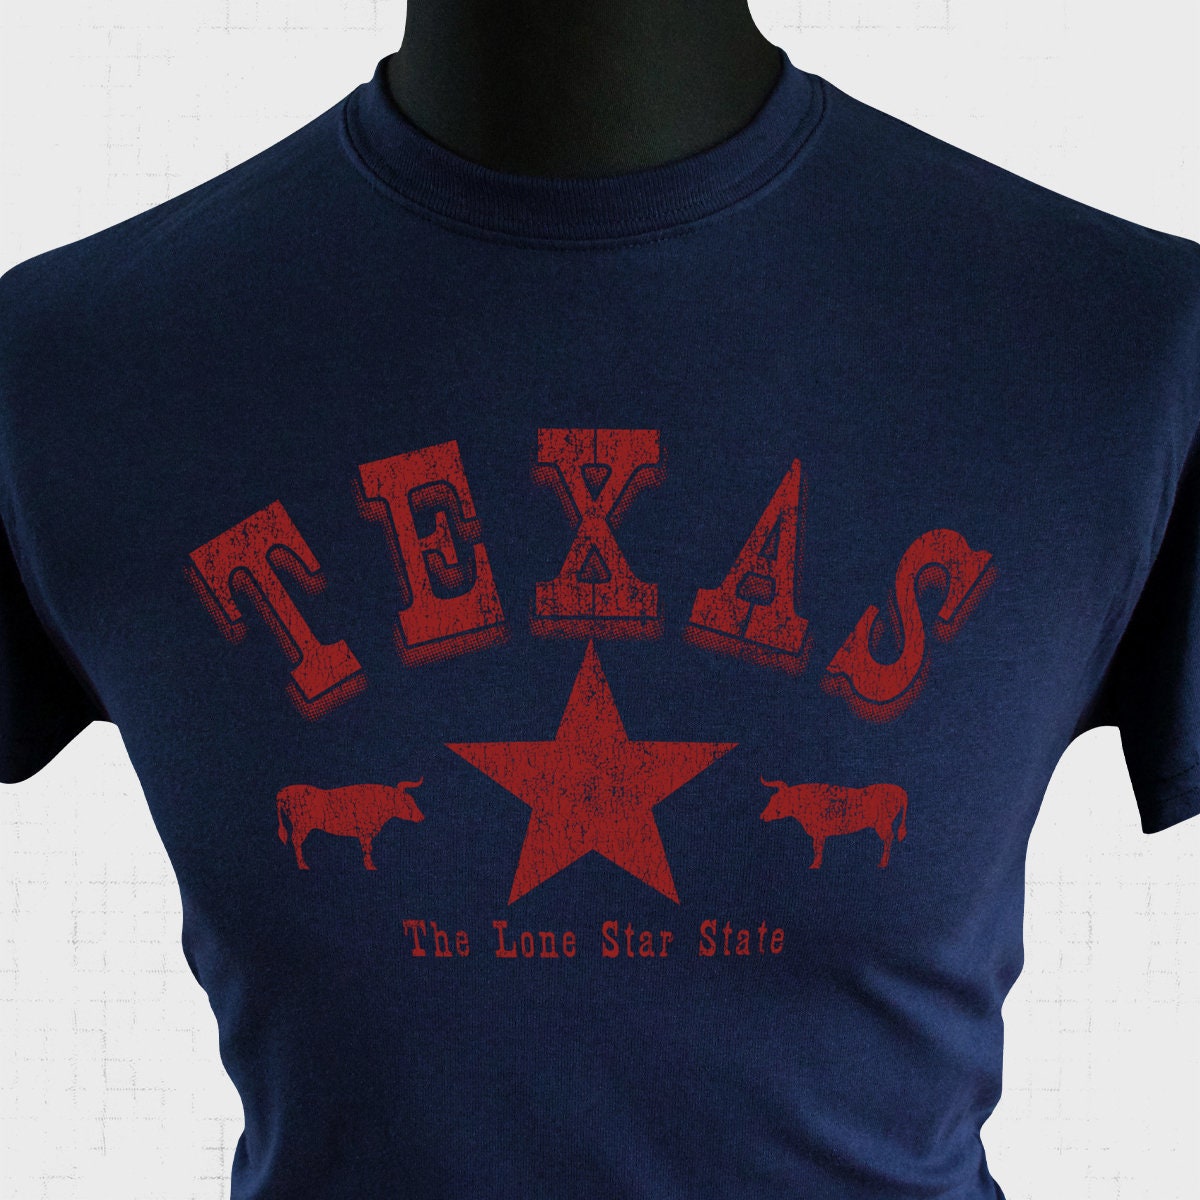 80s SIERRA Truck light colors apparel - Texas State - T-Shirt